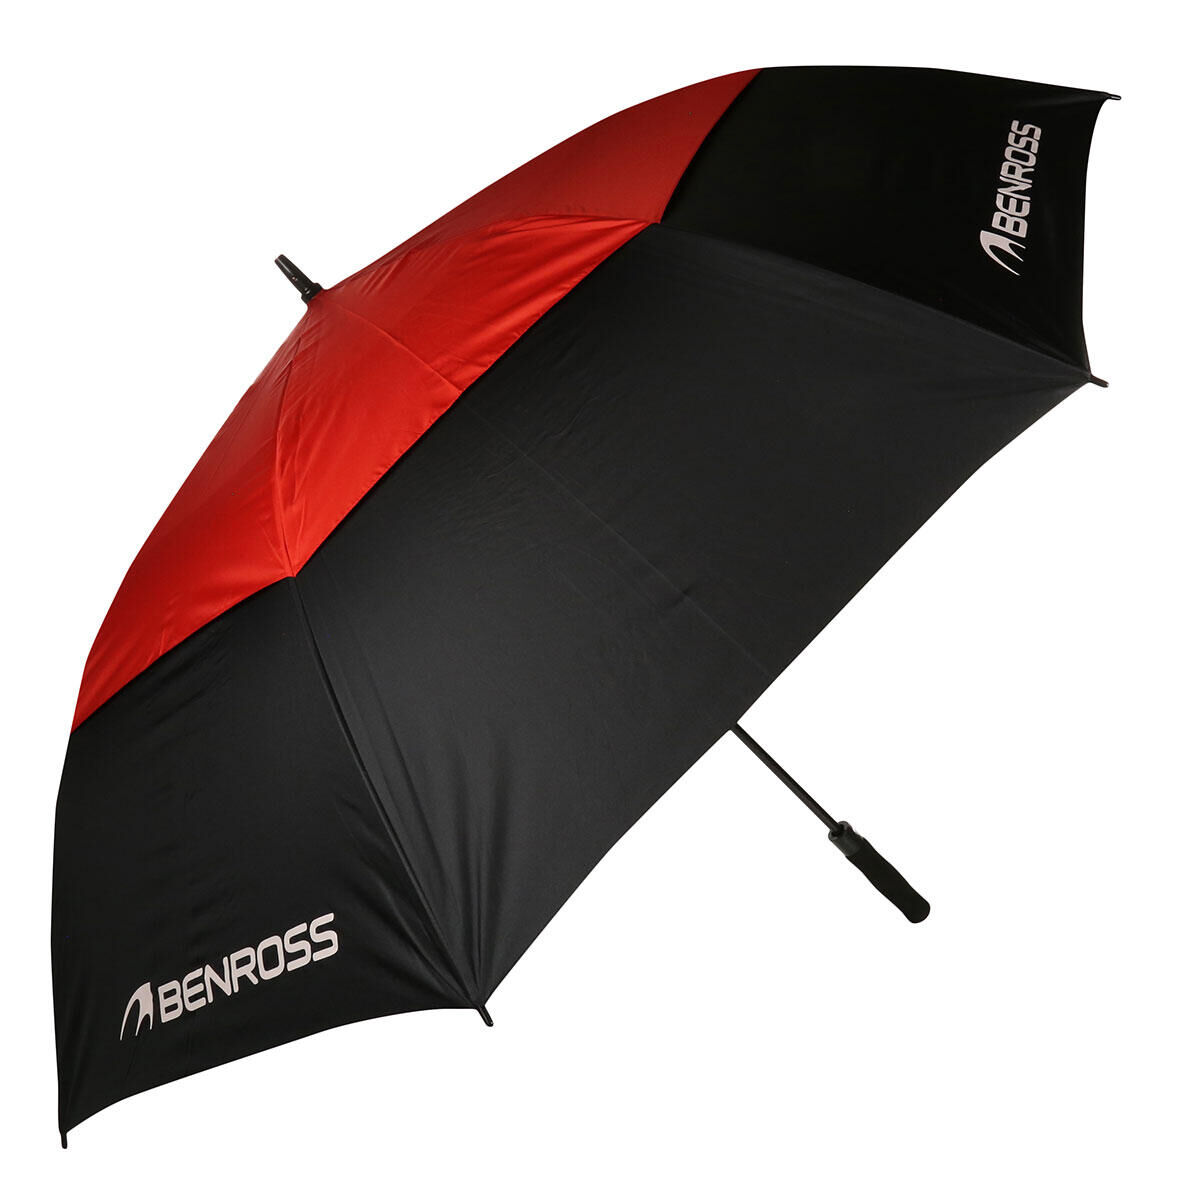 BENROSS Benross 68" Double Canopy Golf Umbrella